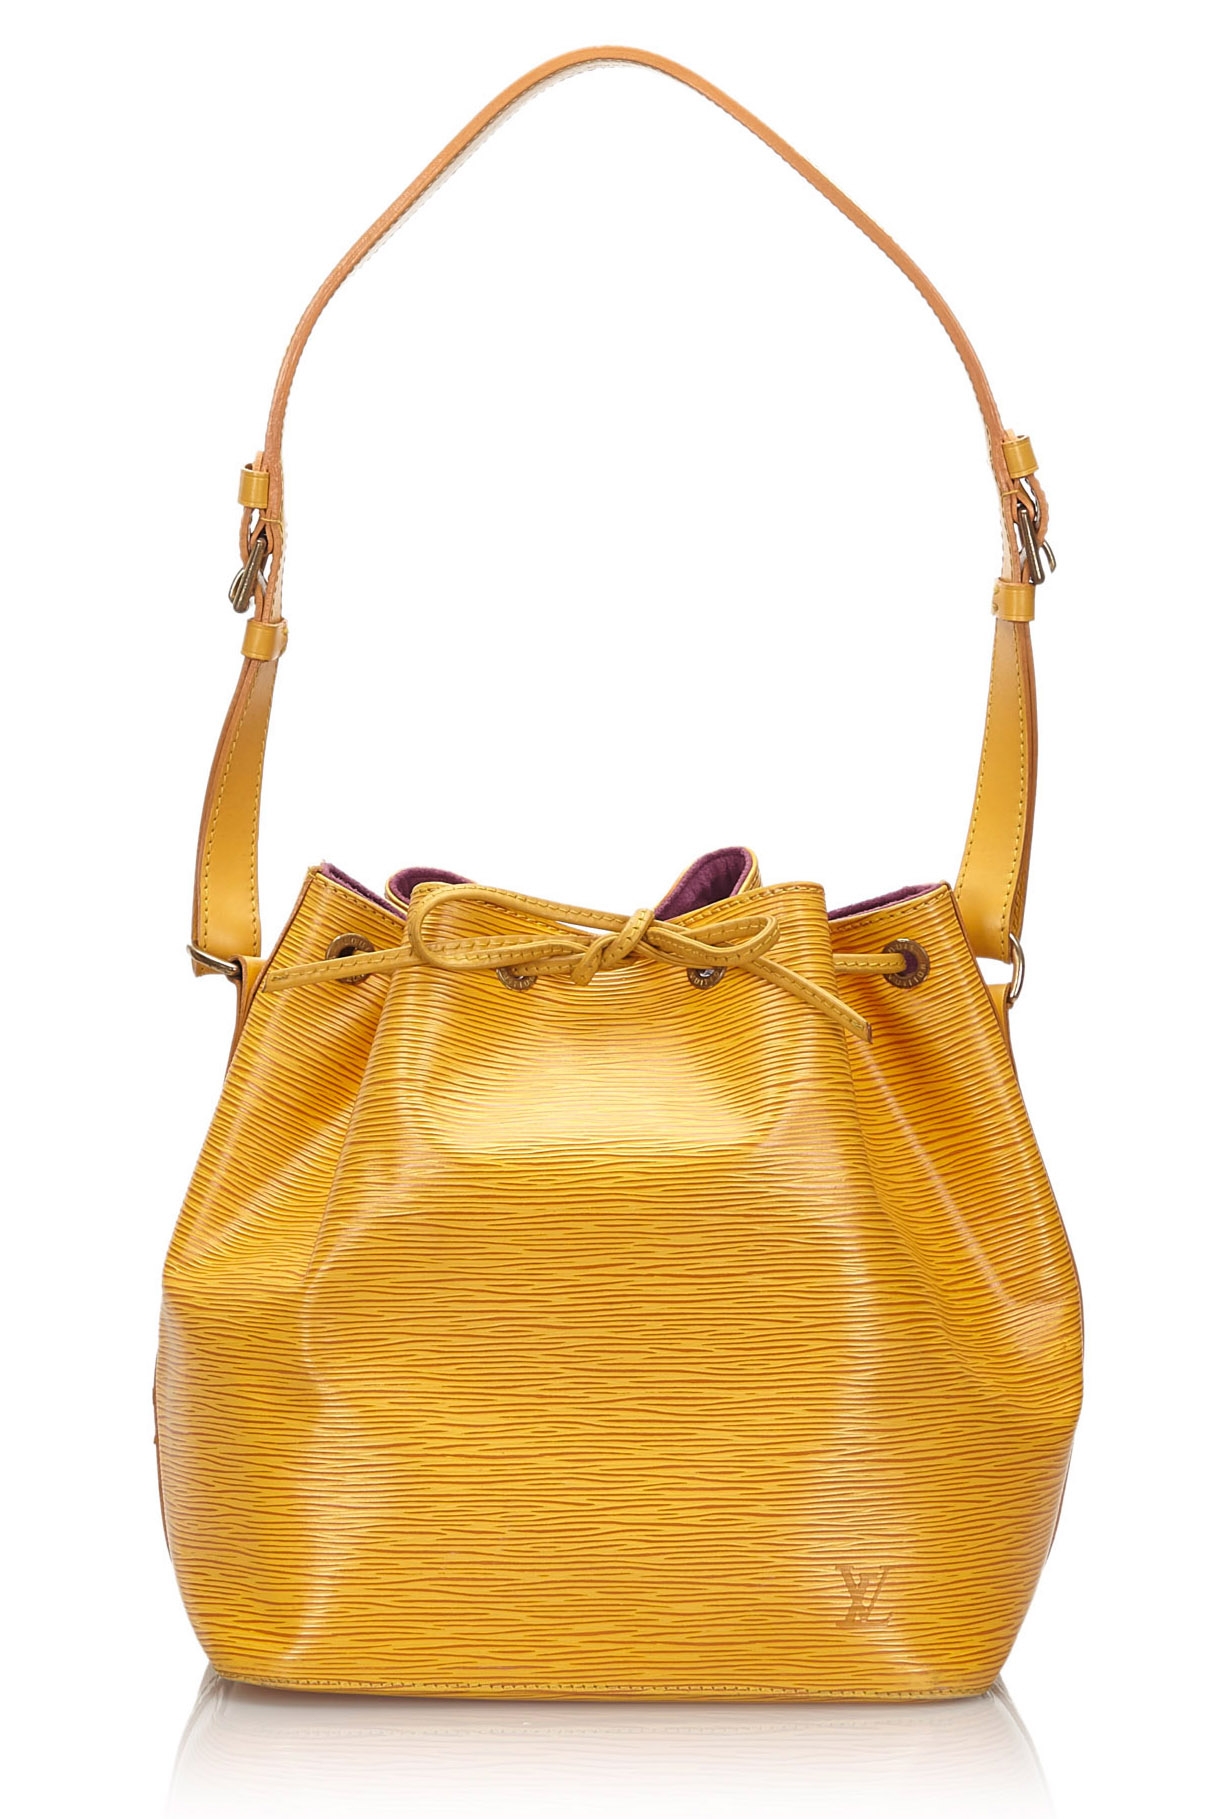 Vintage Louis Vuitton Petit Noe - Vintage Handbag